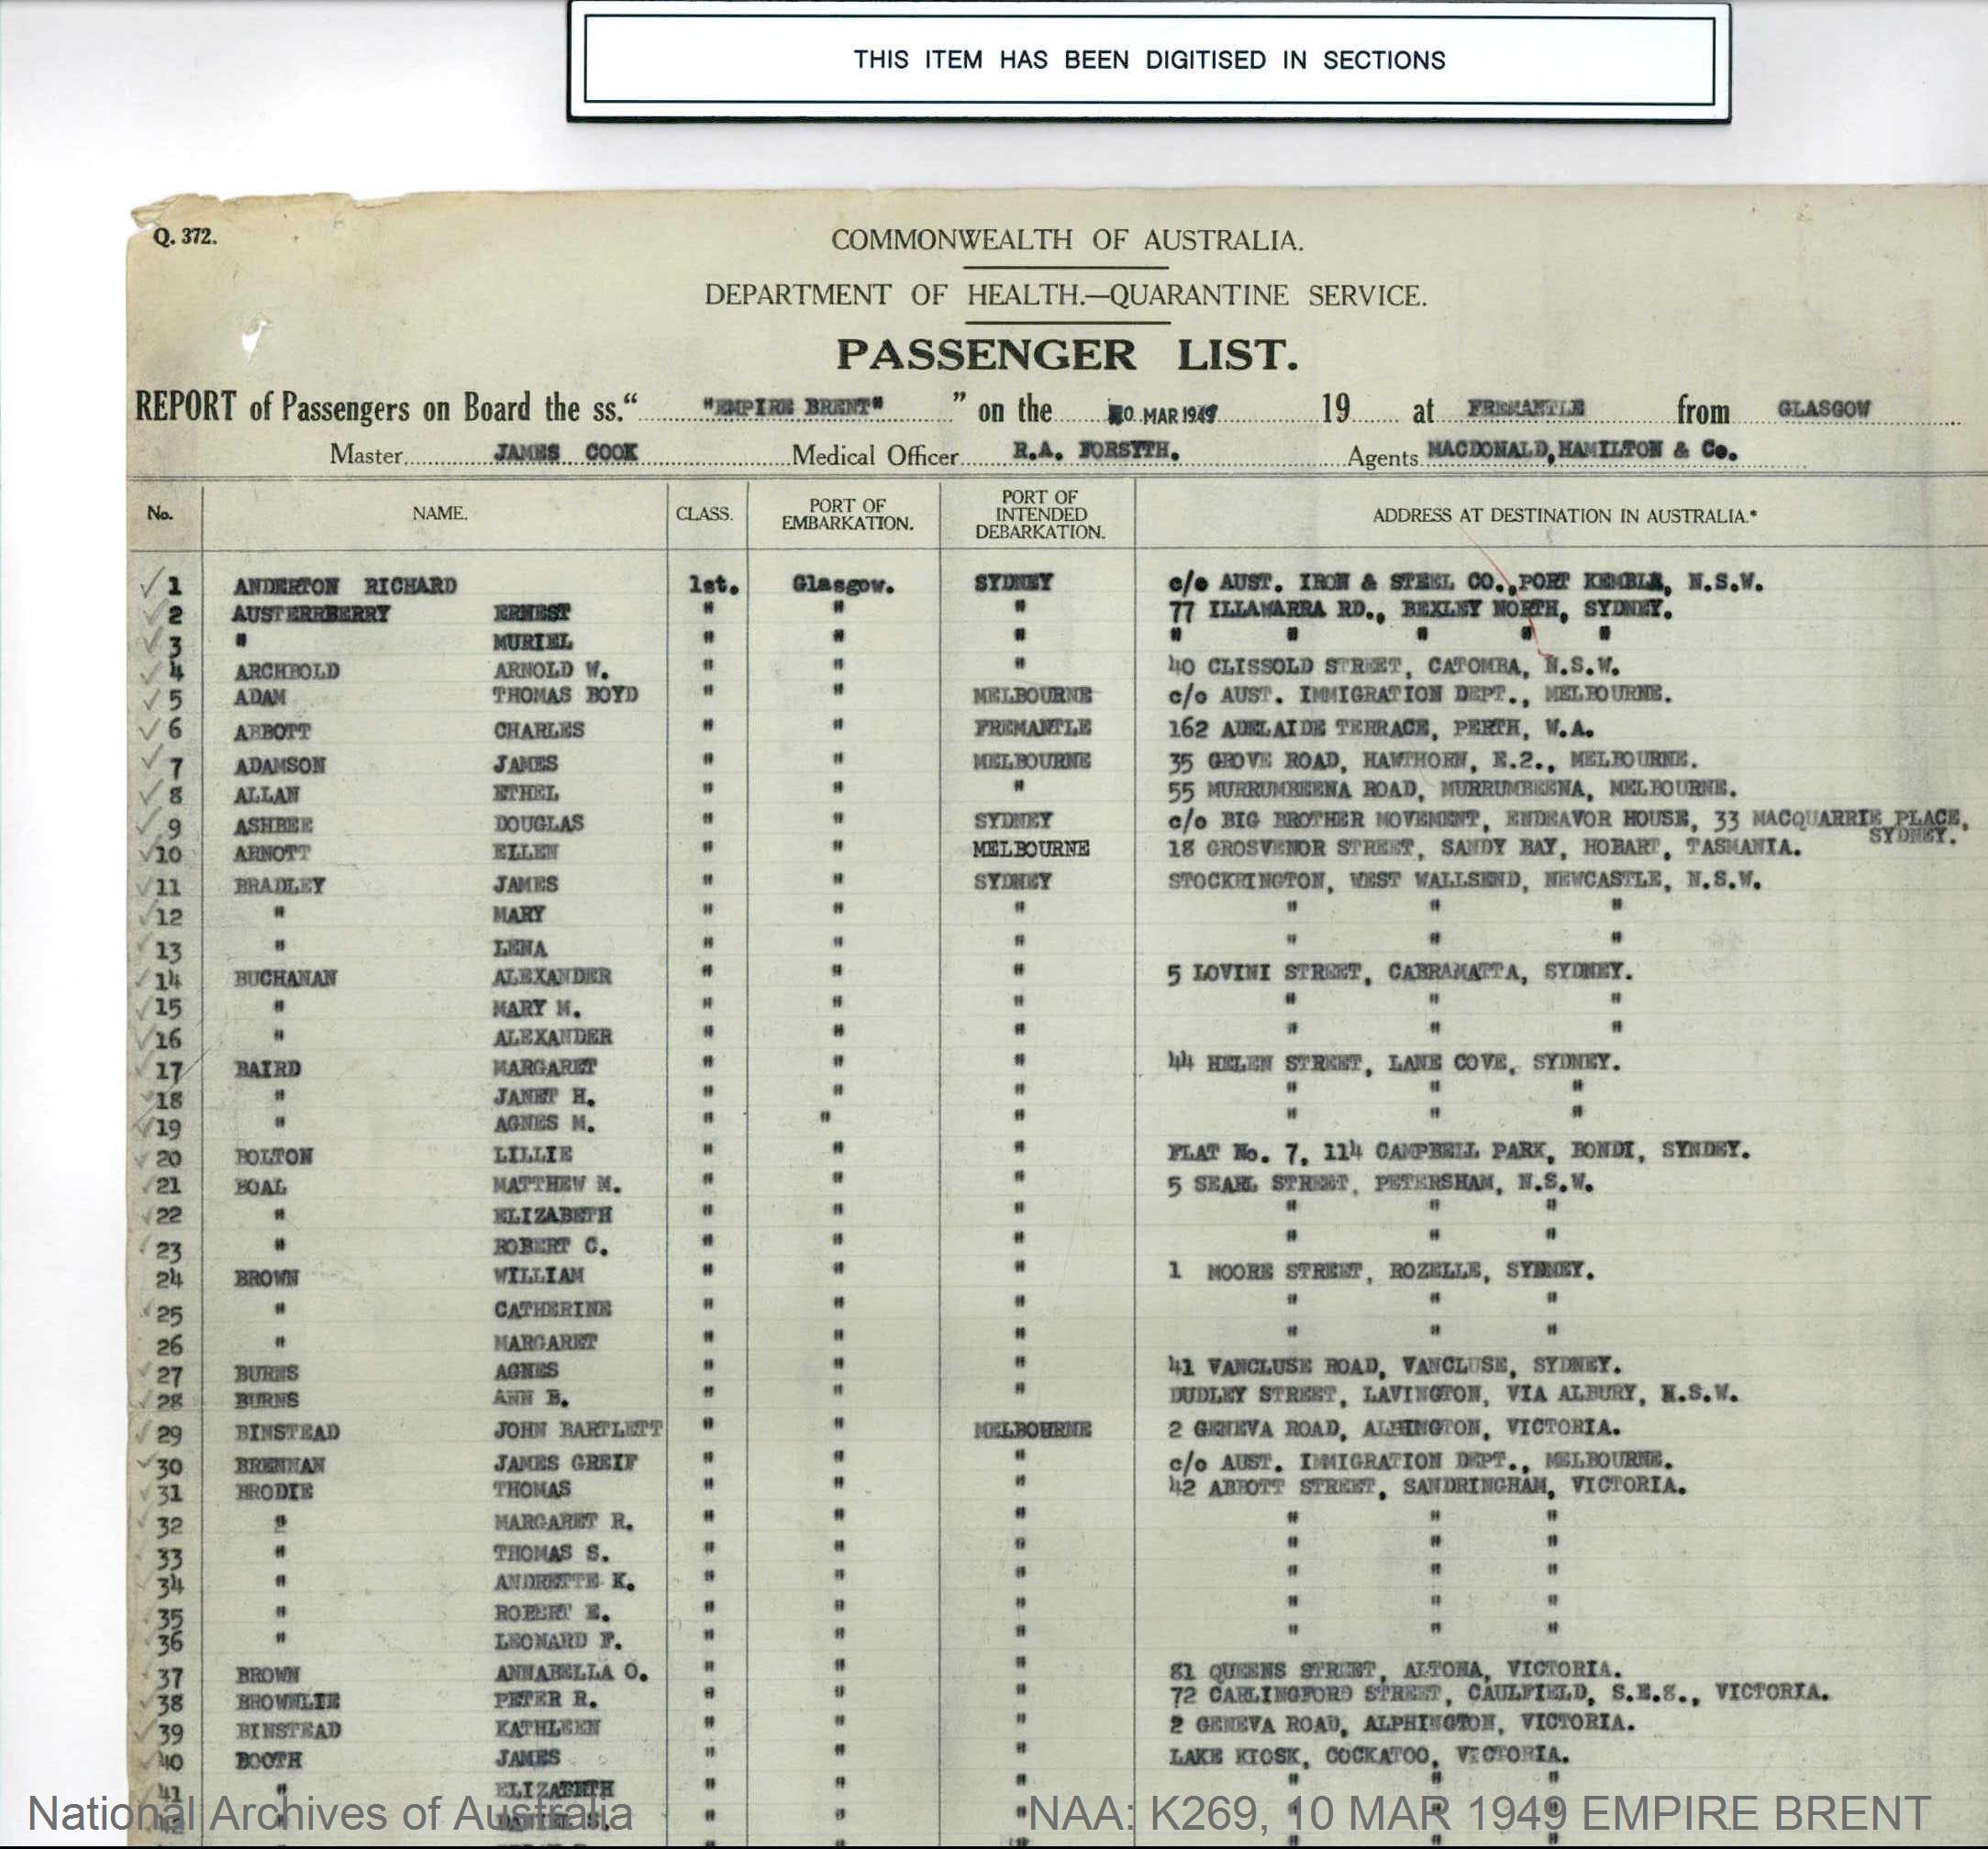 NAA: K269, 10 MAR 1949 EMPIRE BRENT